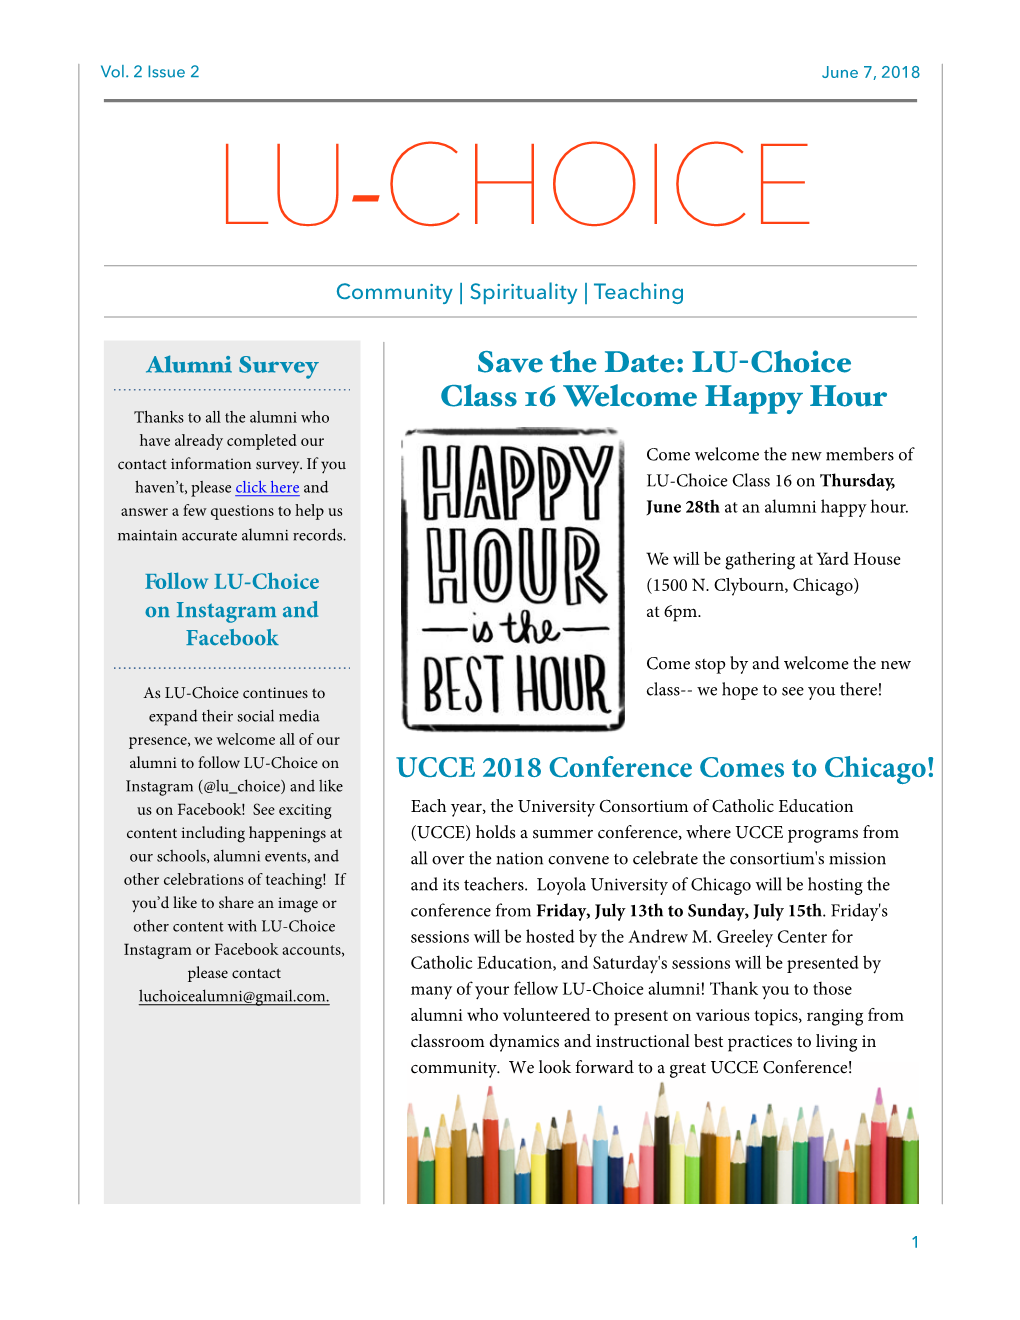 LU CHOICE Newsletter Vol 2 Issue 2